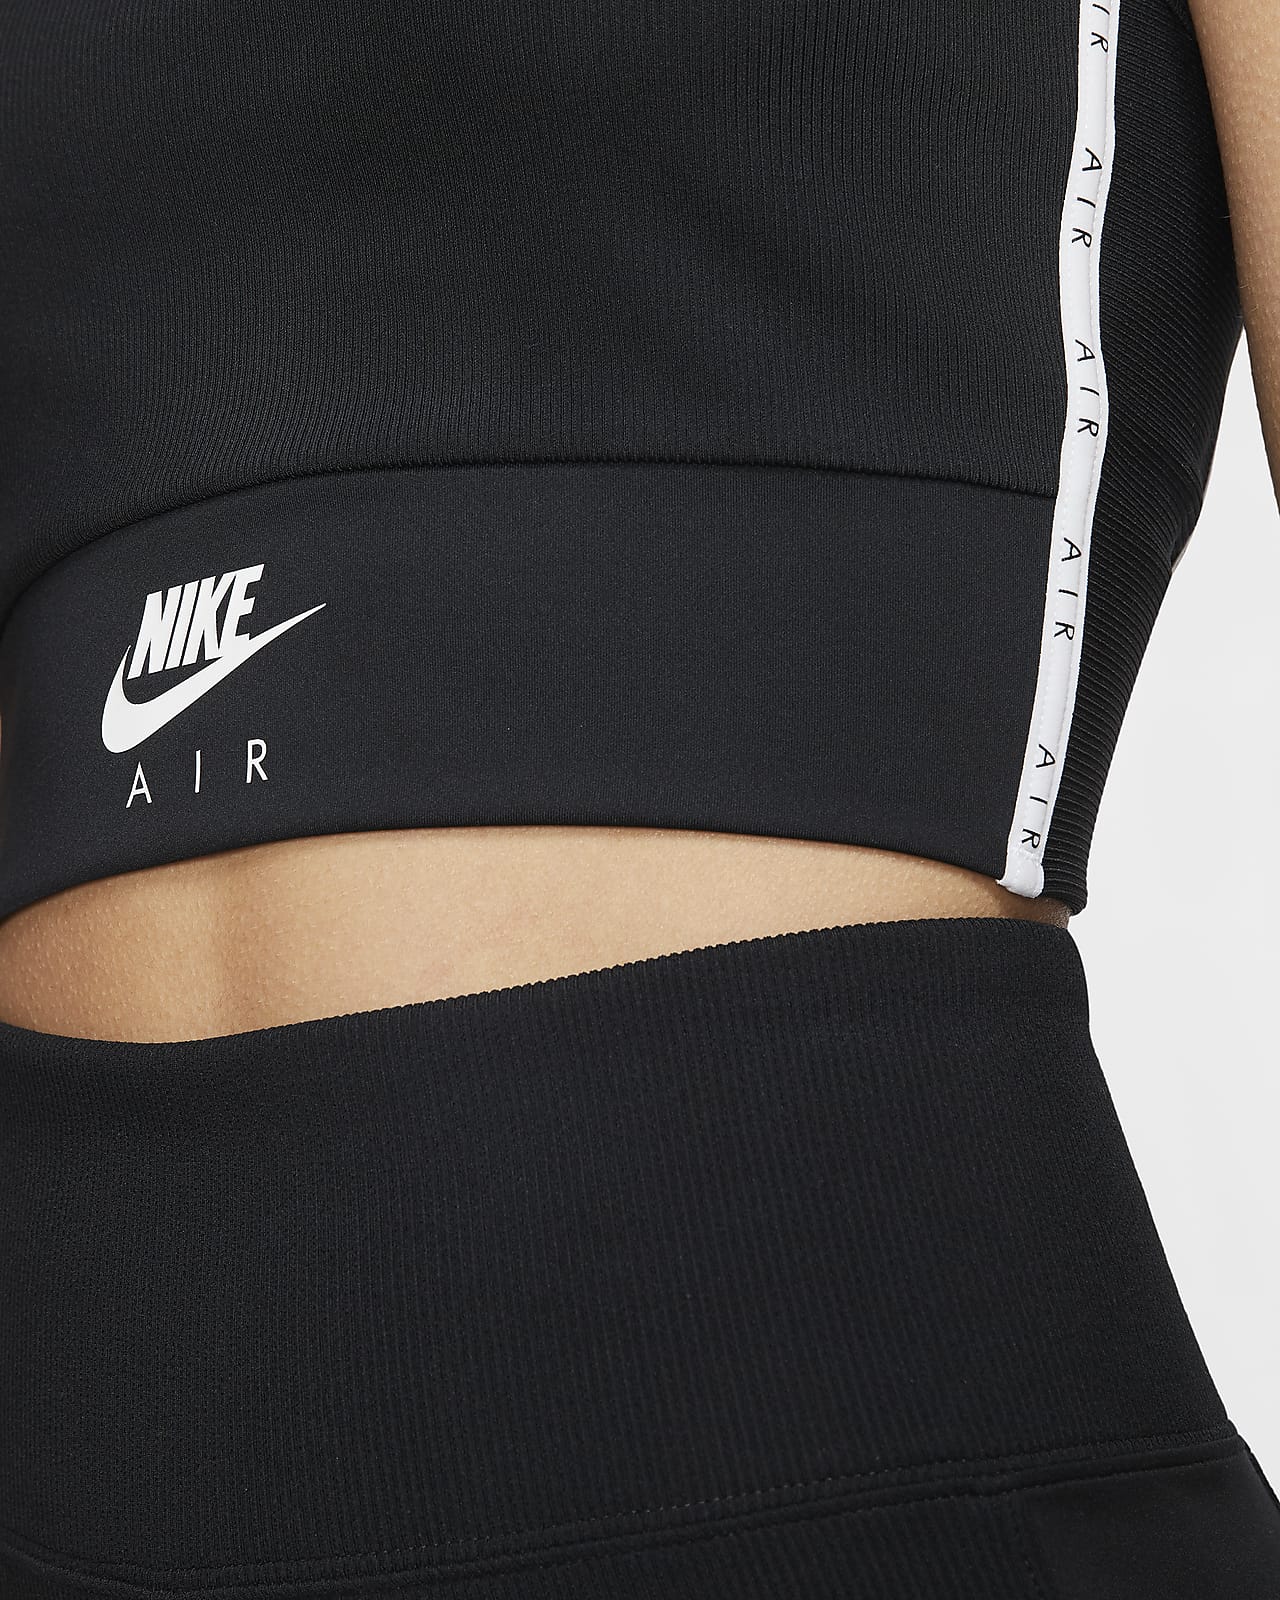 Nike Air Women's Cropped Tank Top. Nike AU